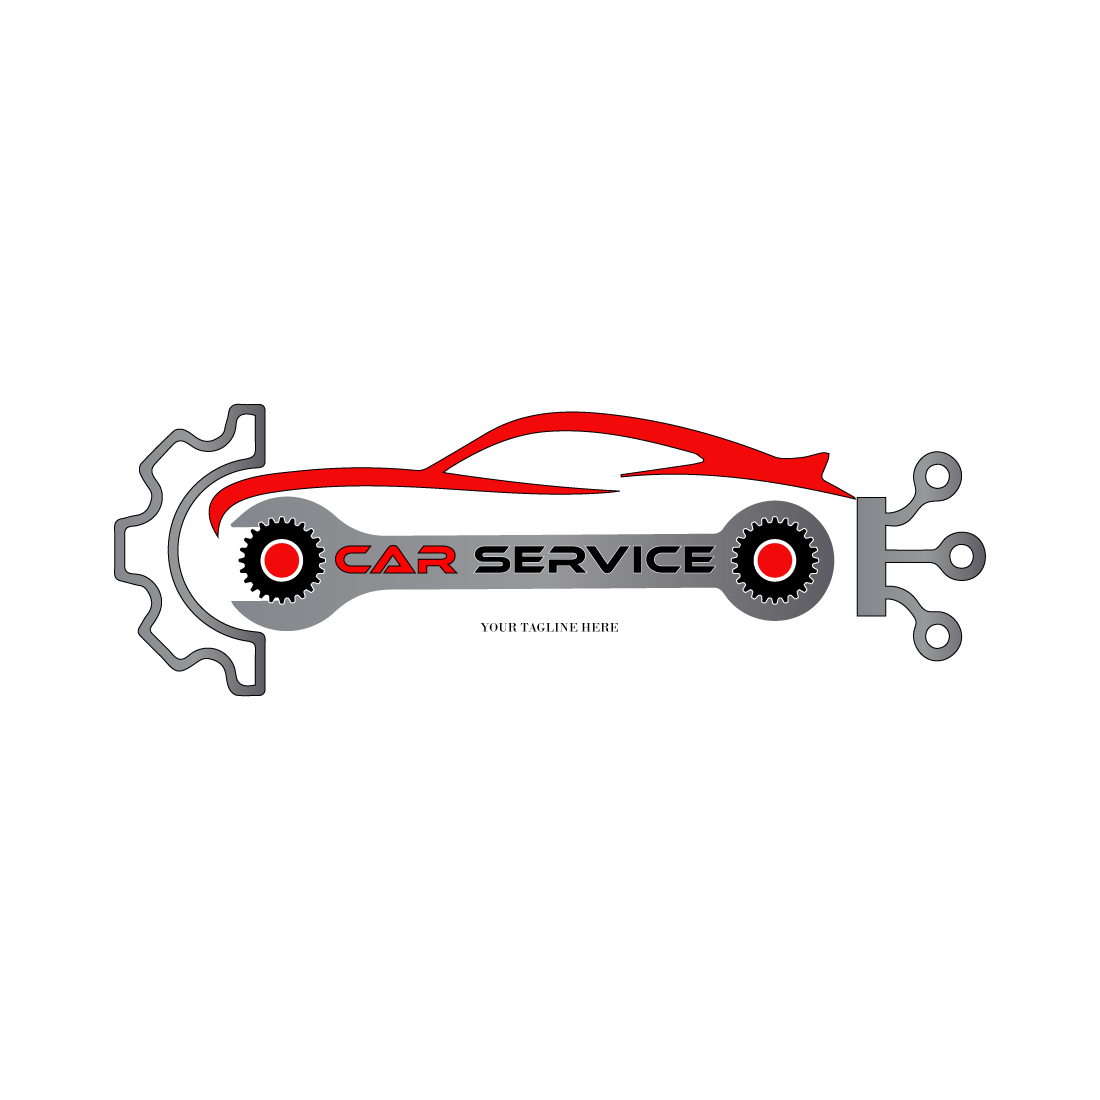 Car Service Logo cover image.